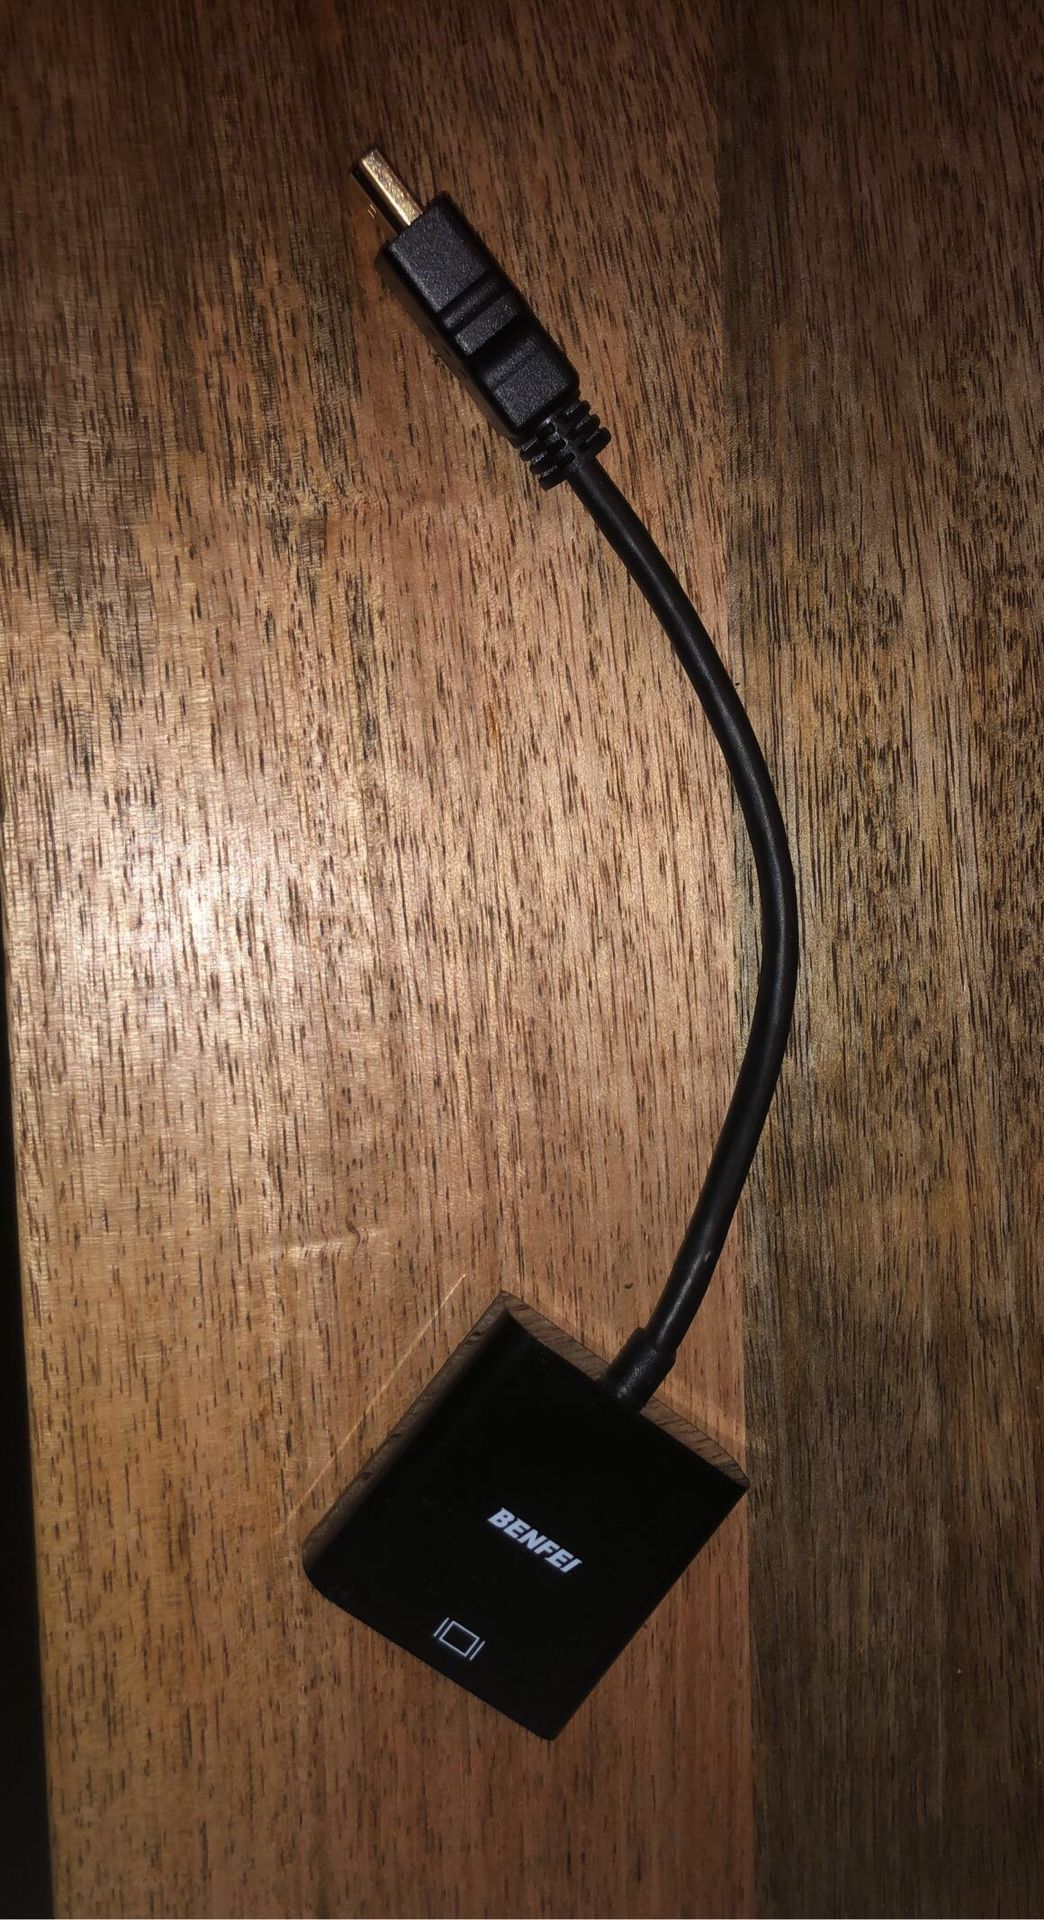 HDMI to VGA 